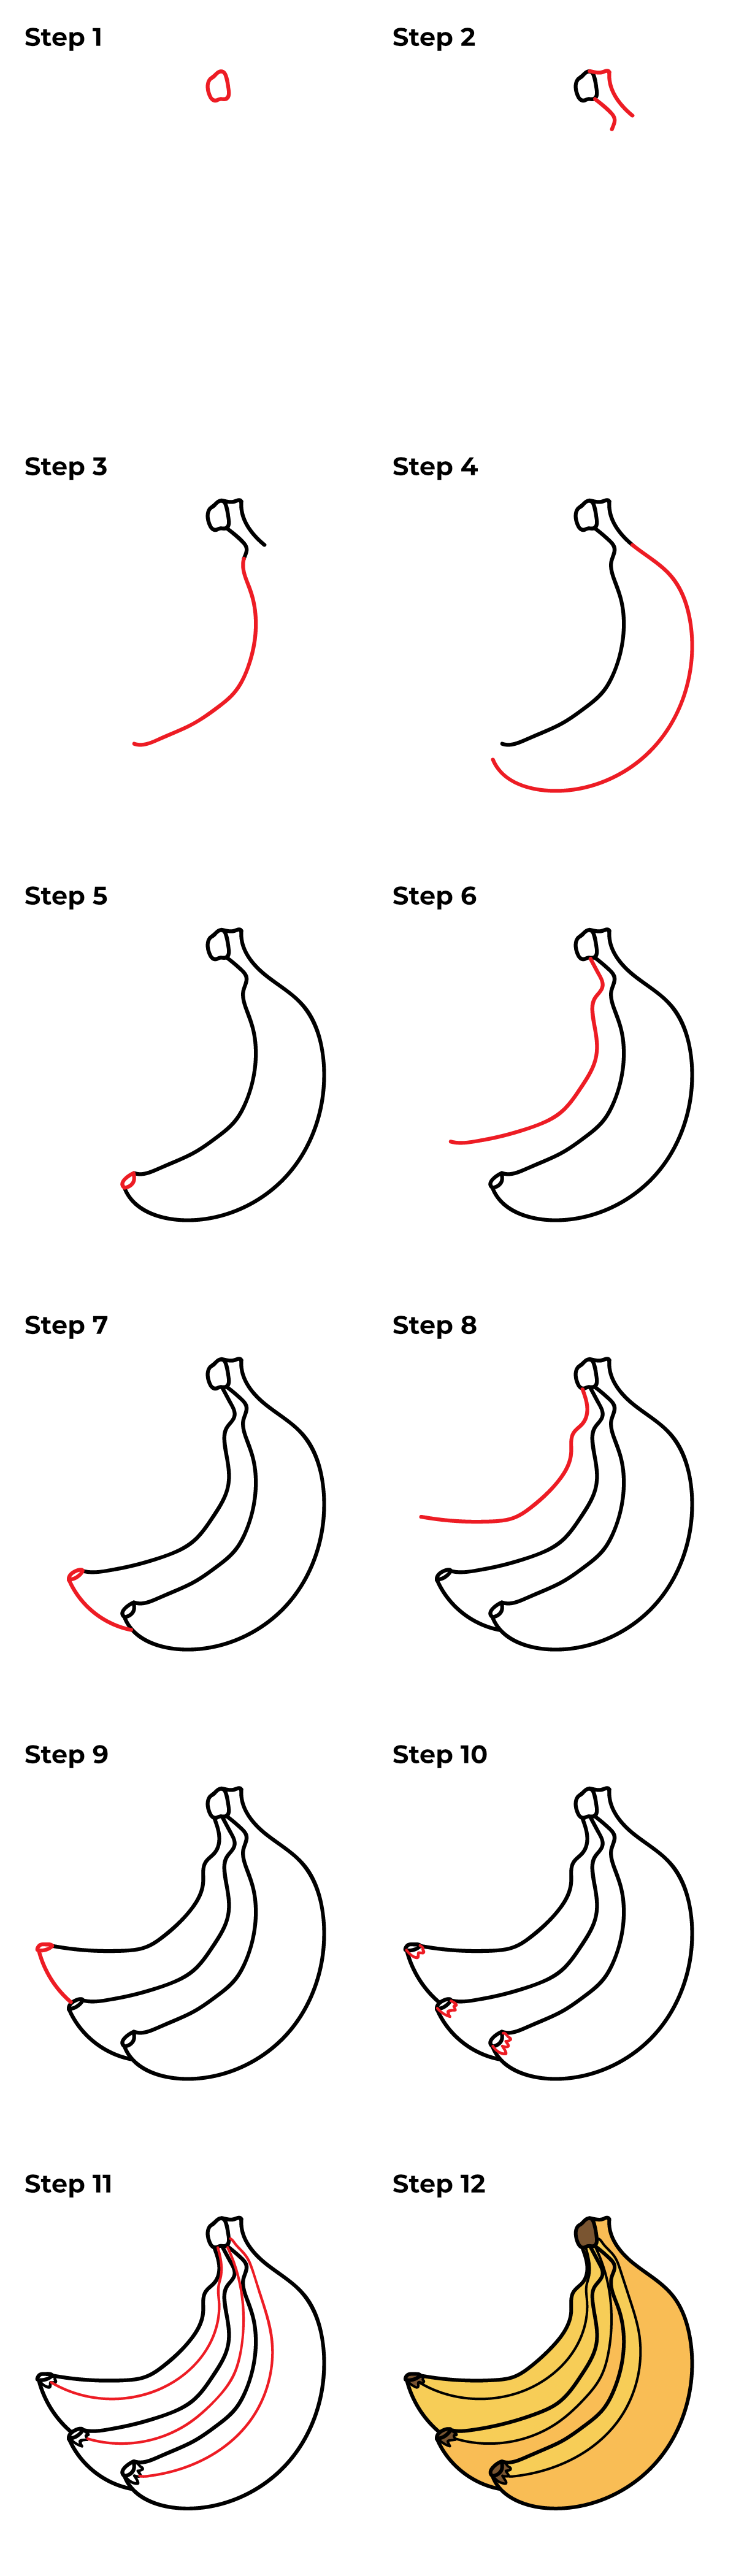 Banana Drawing PNG Image for Free Download